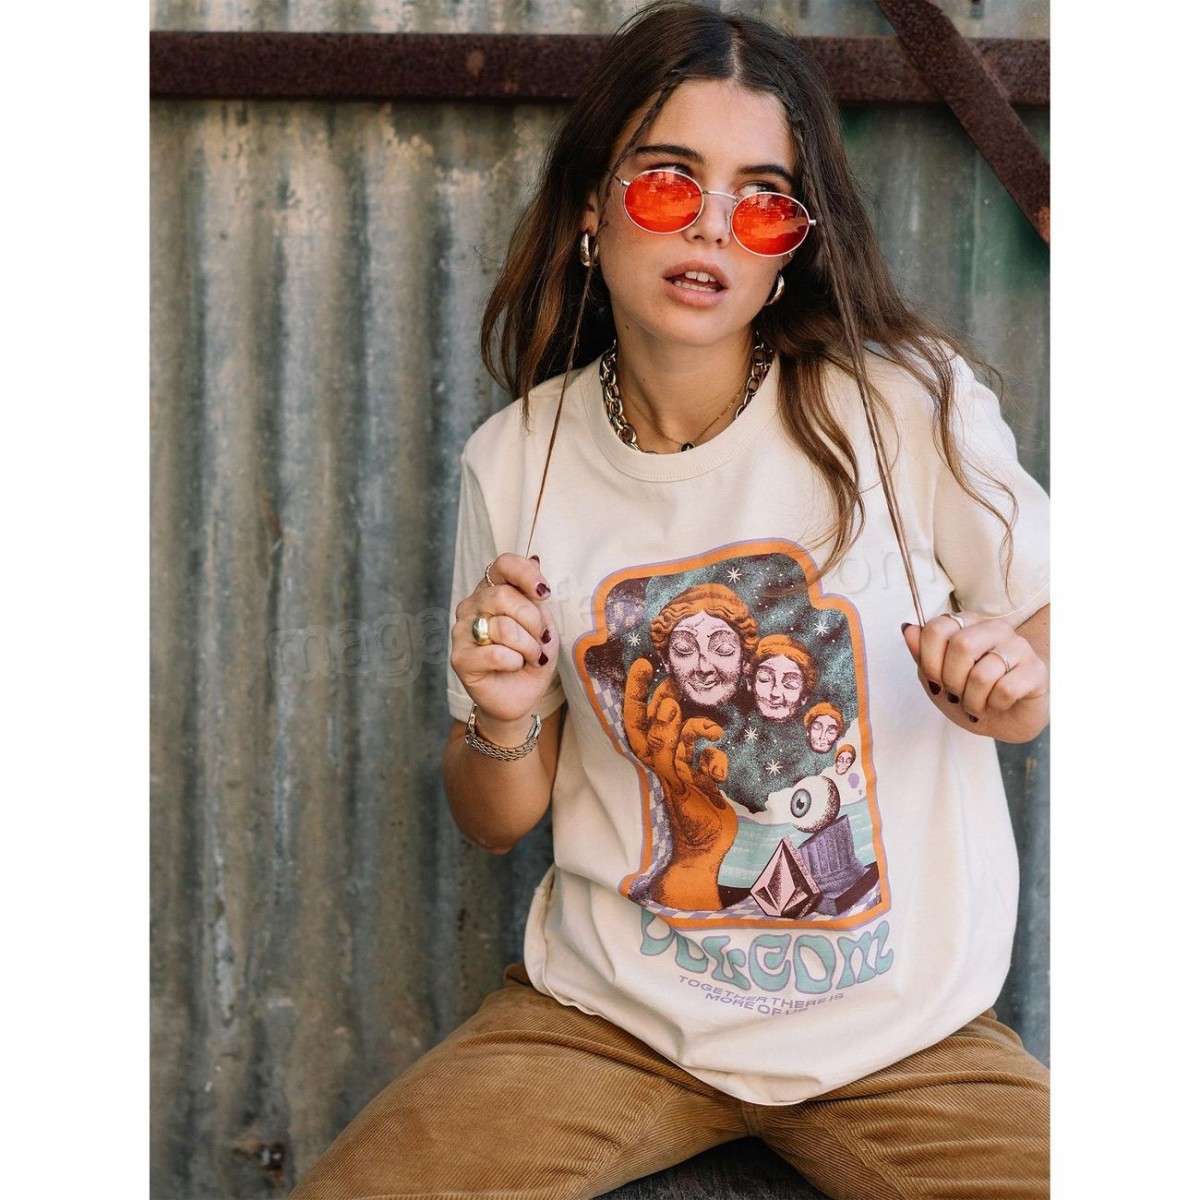 Volcom-Randonnée pédestre femme VOLCOM T-shirt Volcom Max Loeffler Tee Sand Femme en solde - -0